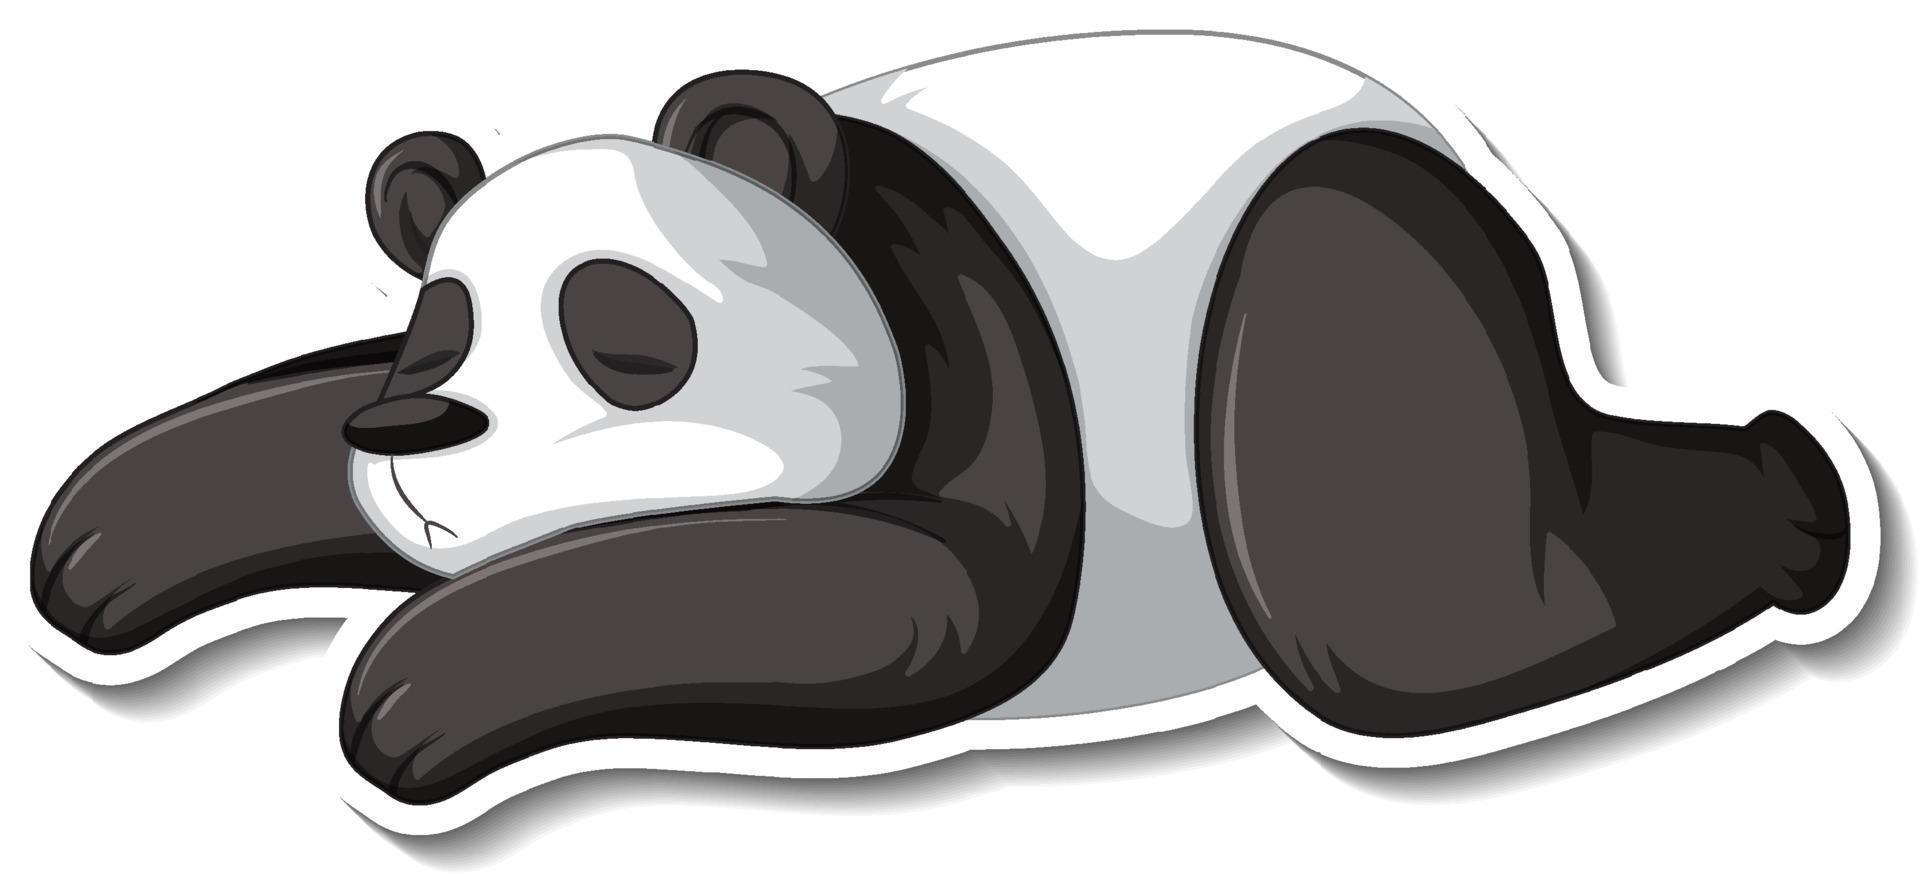 etiqueta engomada de la historieta del animal del oso panda vector